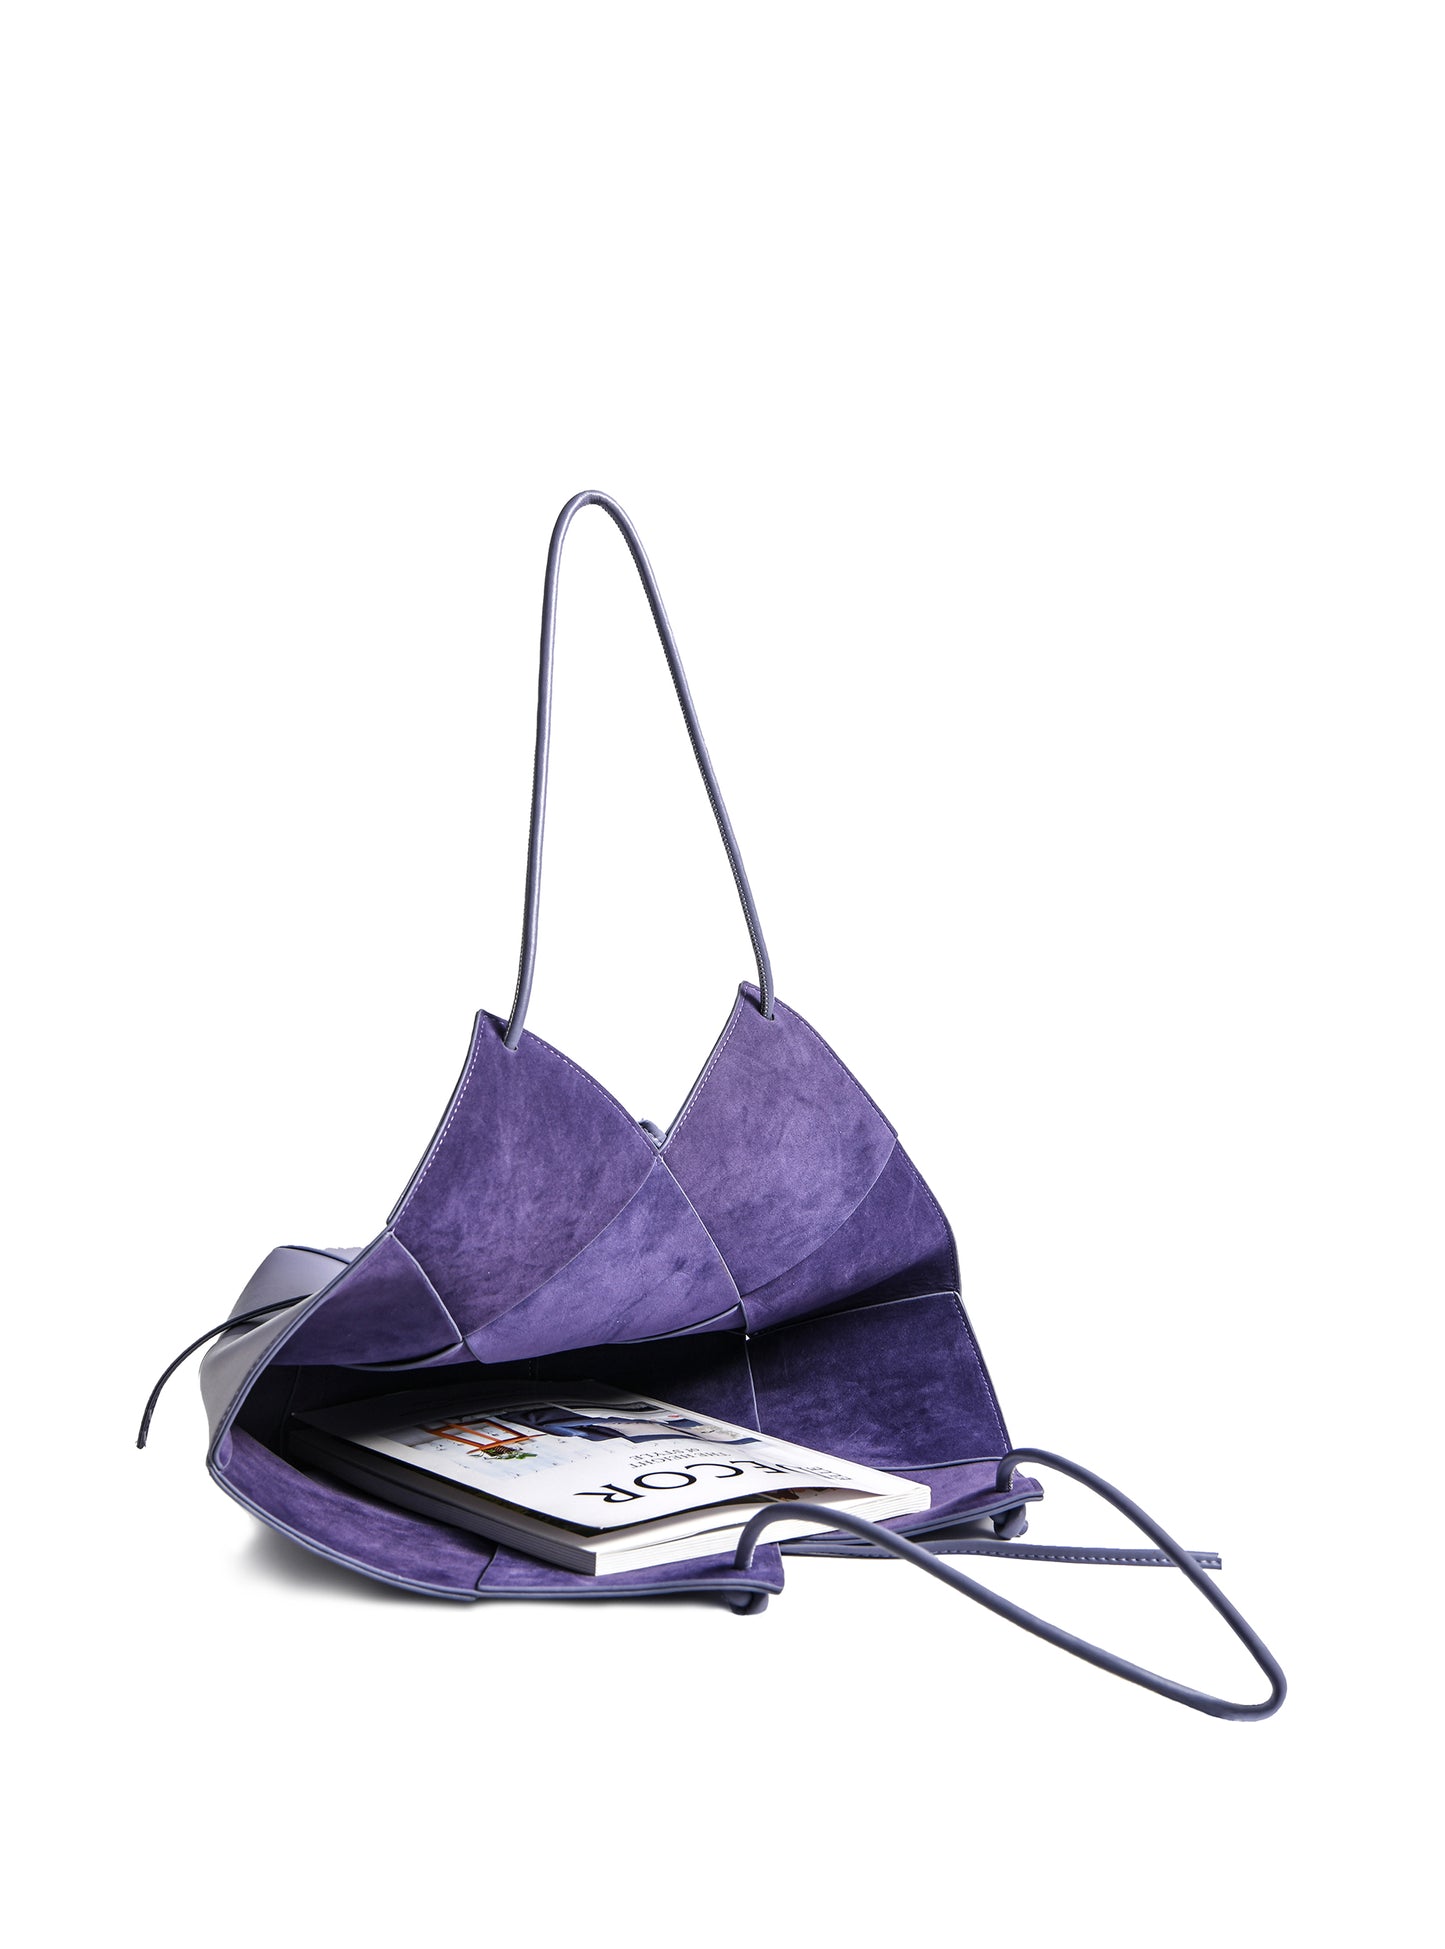 Taylor Contexture Leather Bag, Taro Purple